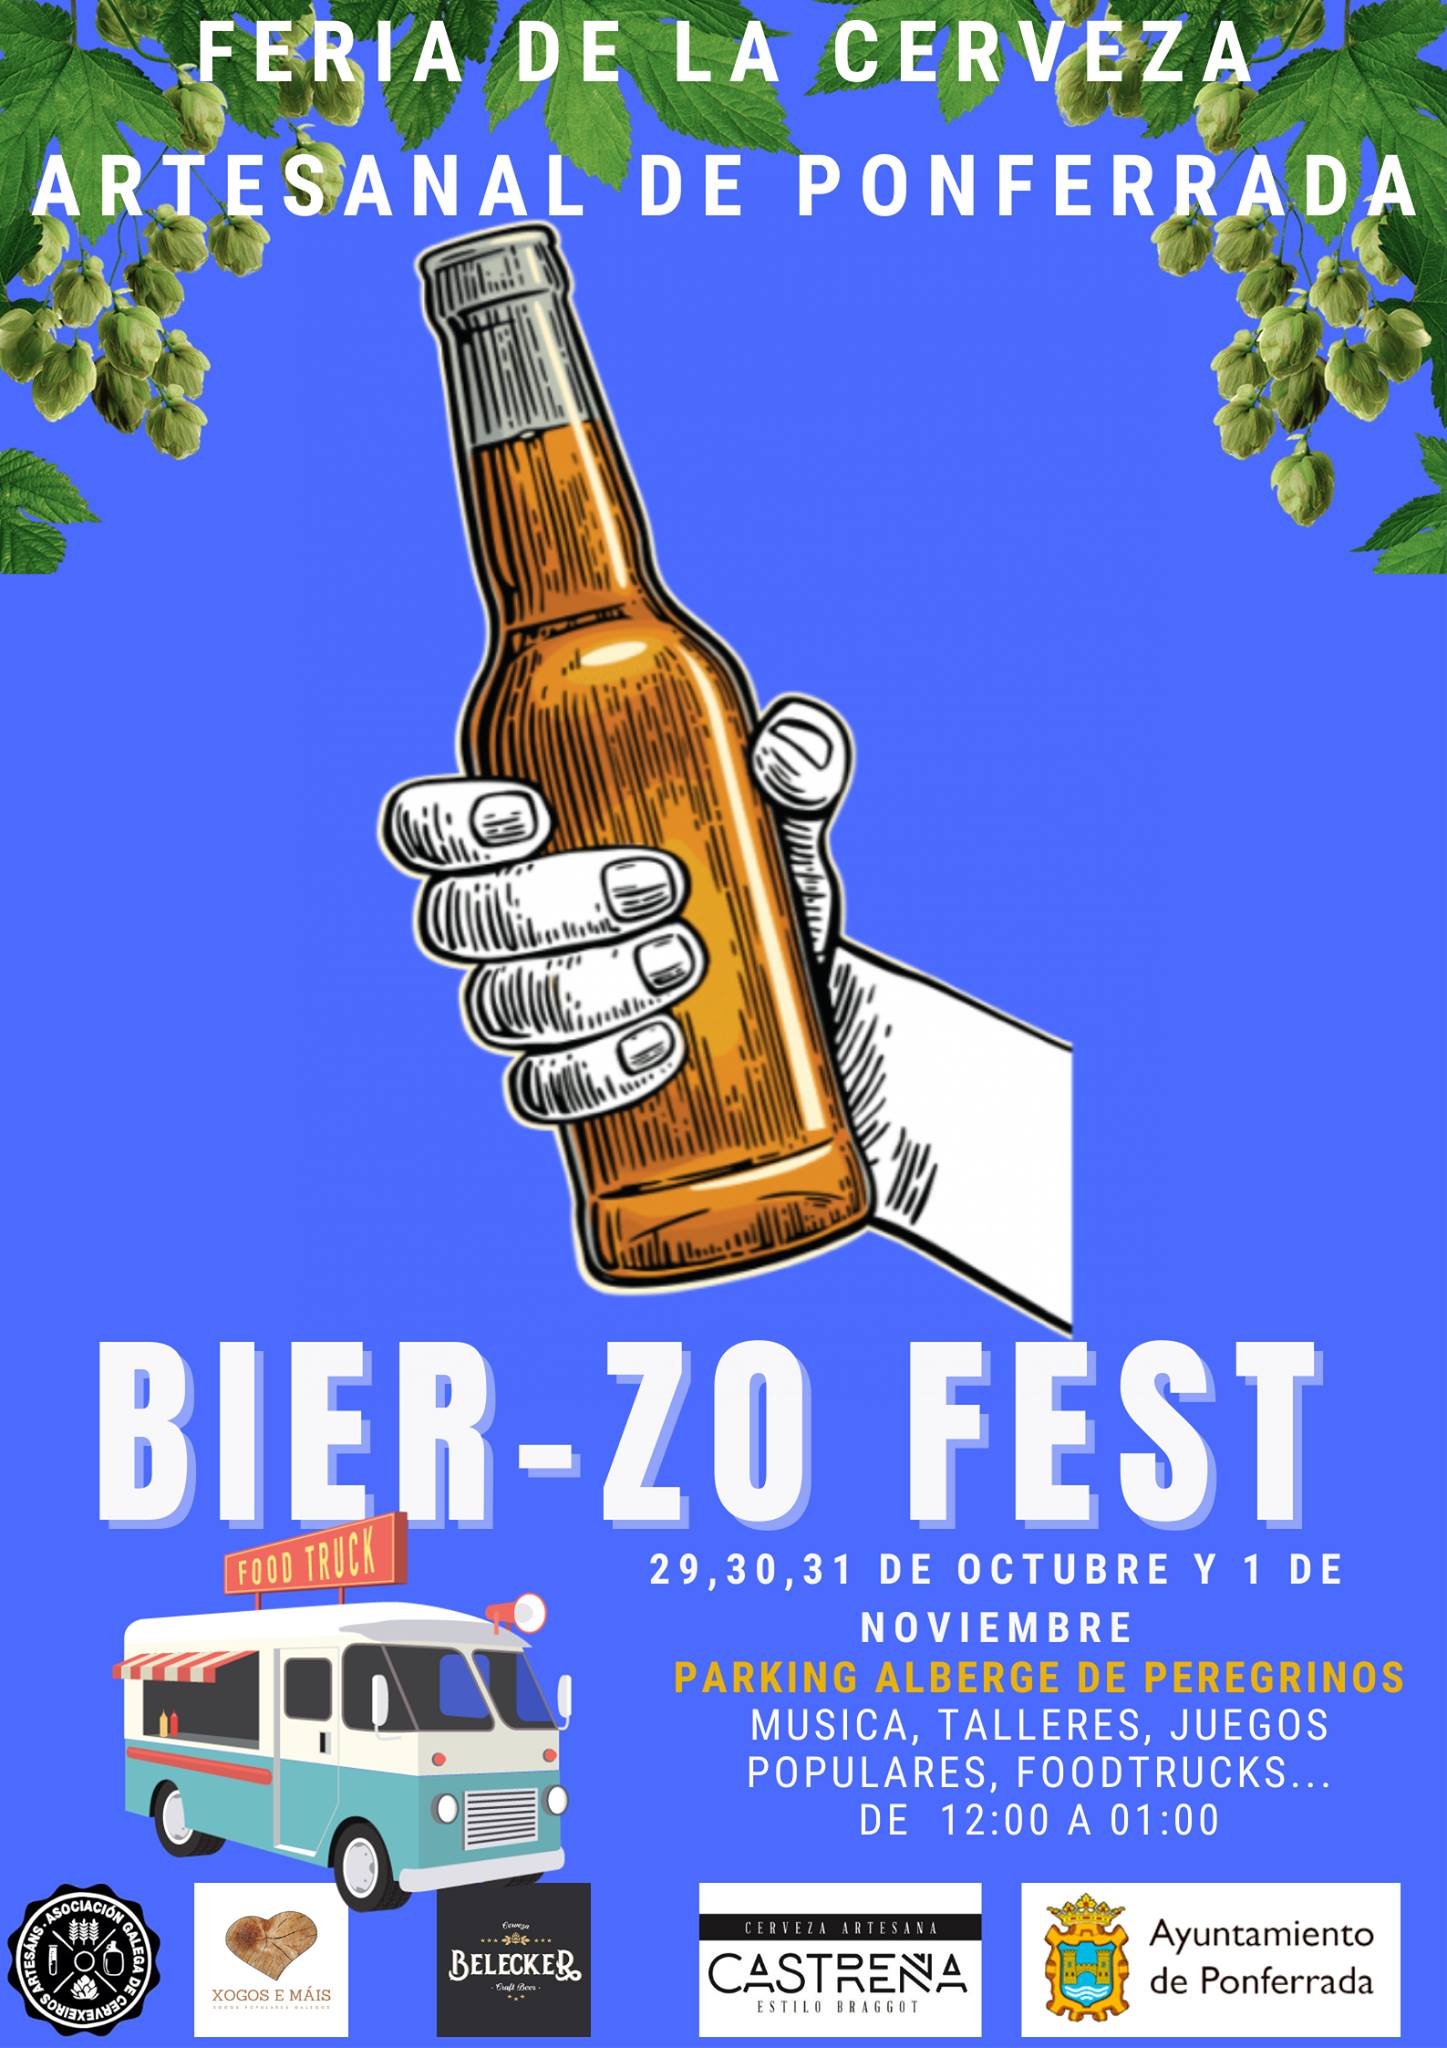 Vuelve Bier-zo Fest, la feria de la cerveza artesana a Ponferrada 2